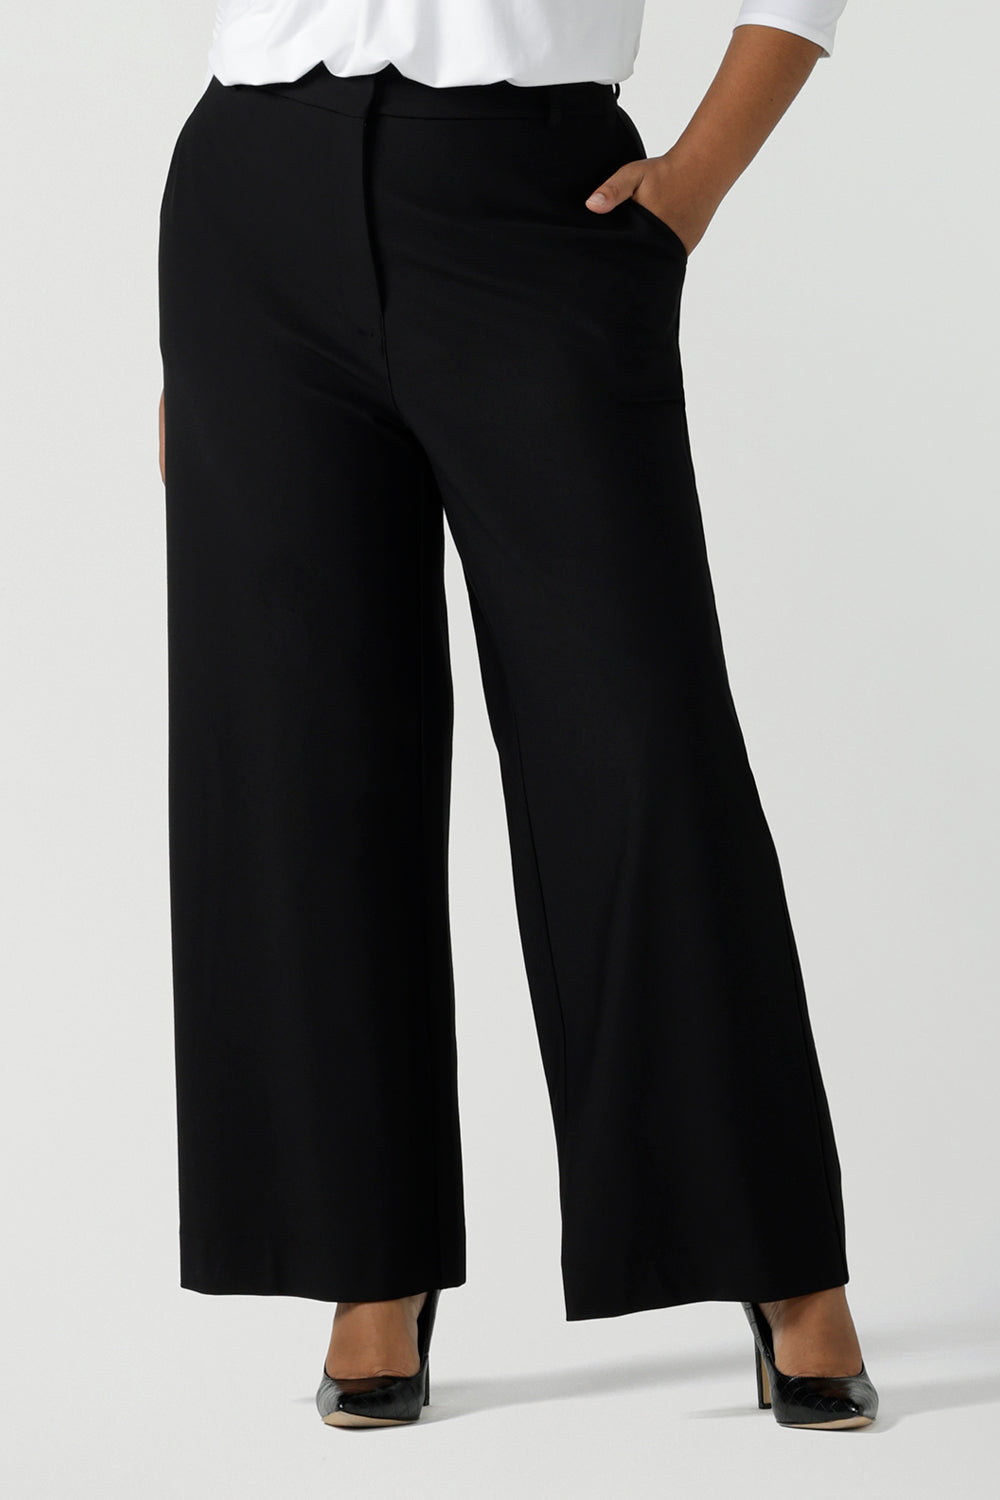 Kade Tailored Pant in Black, Leina & Fleur